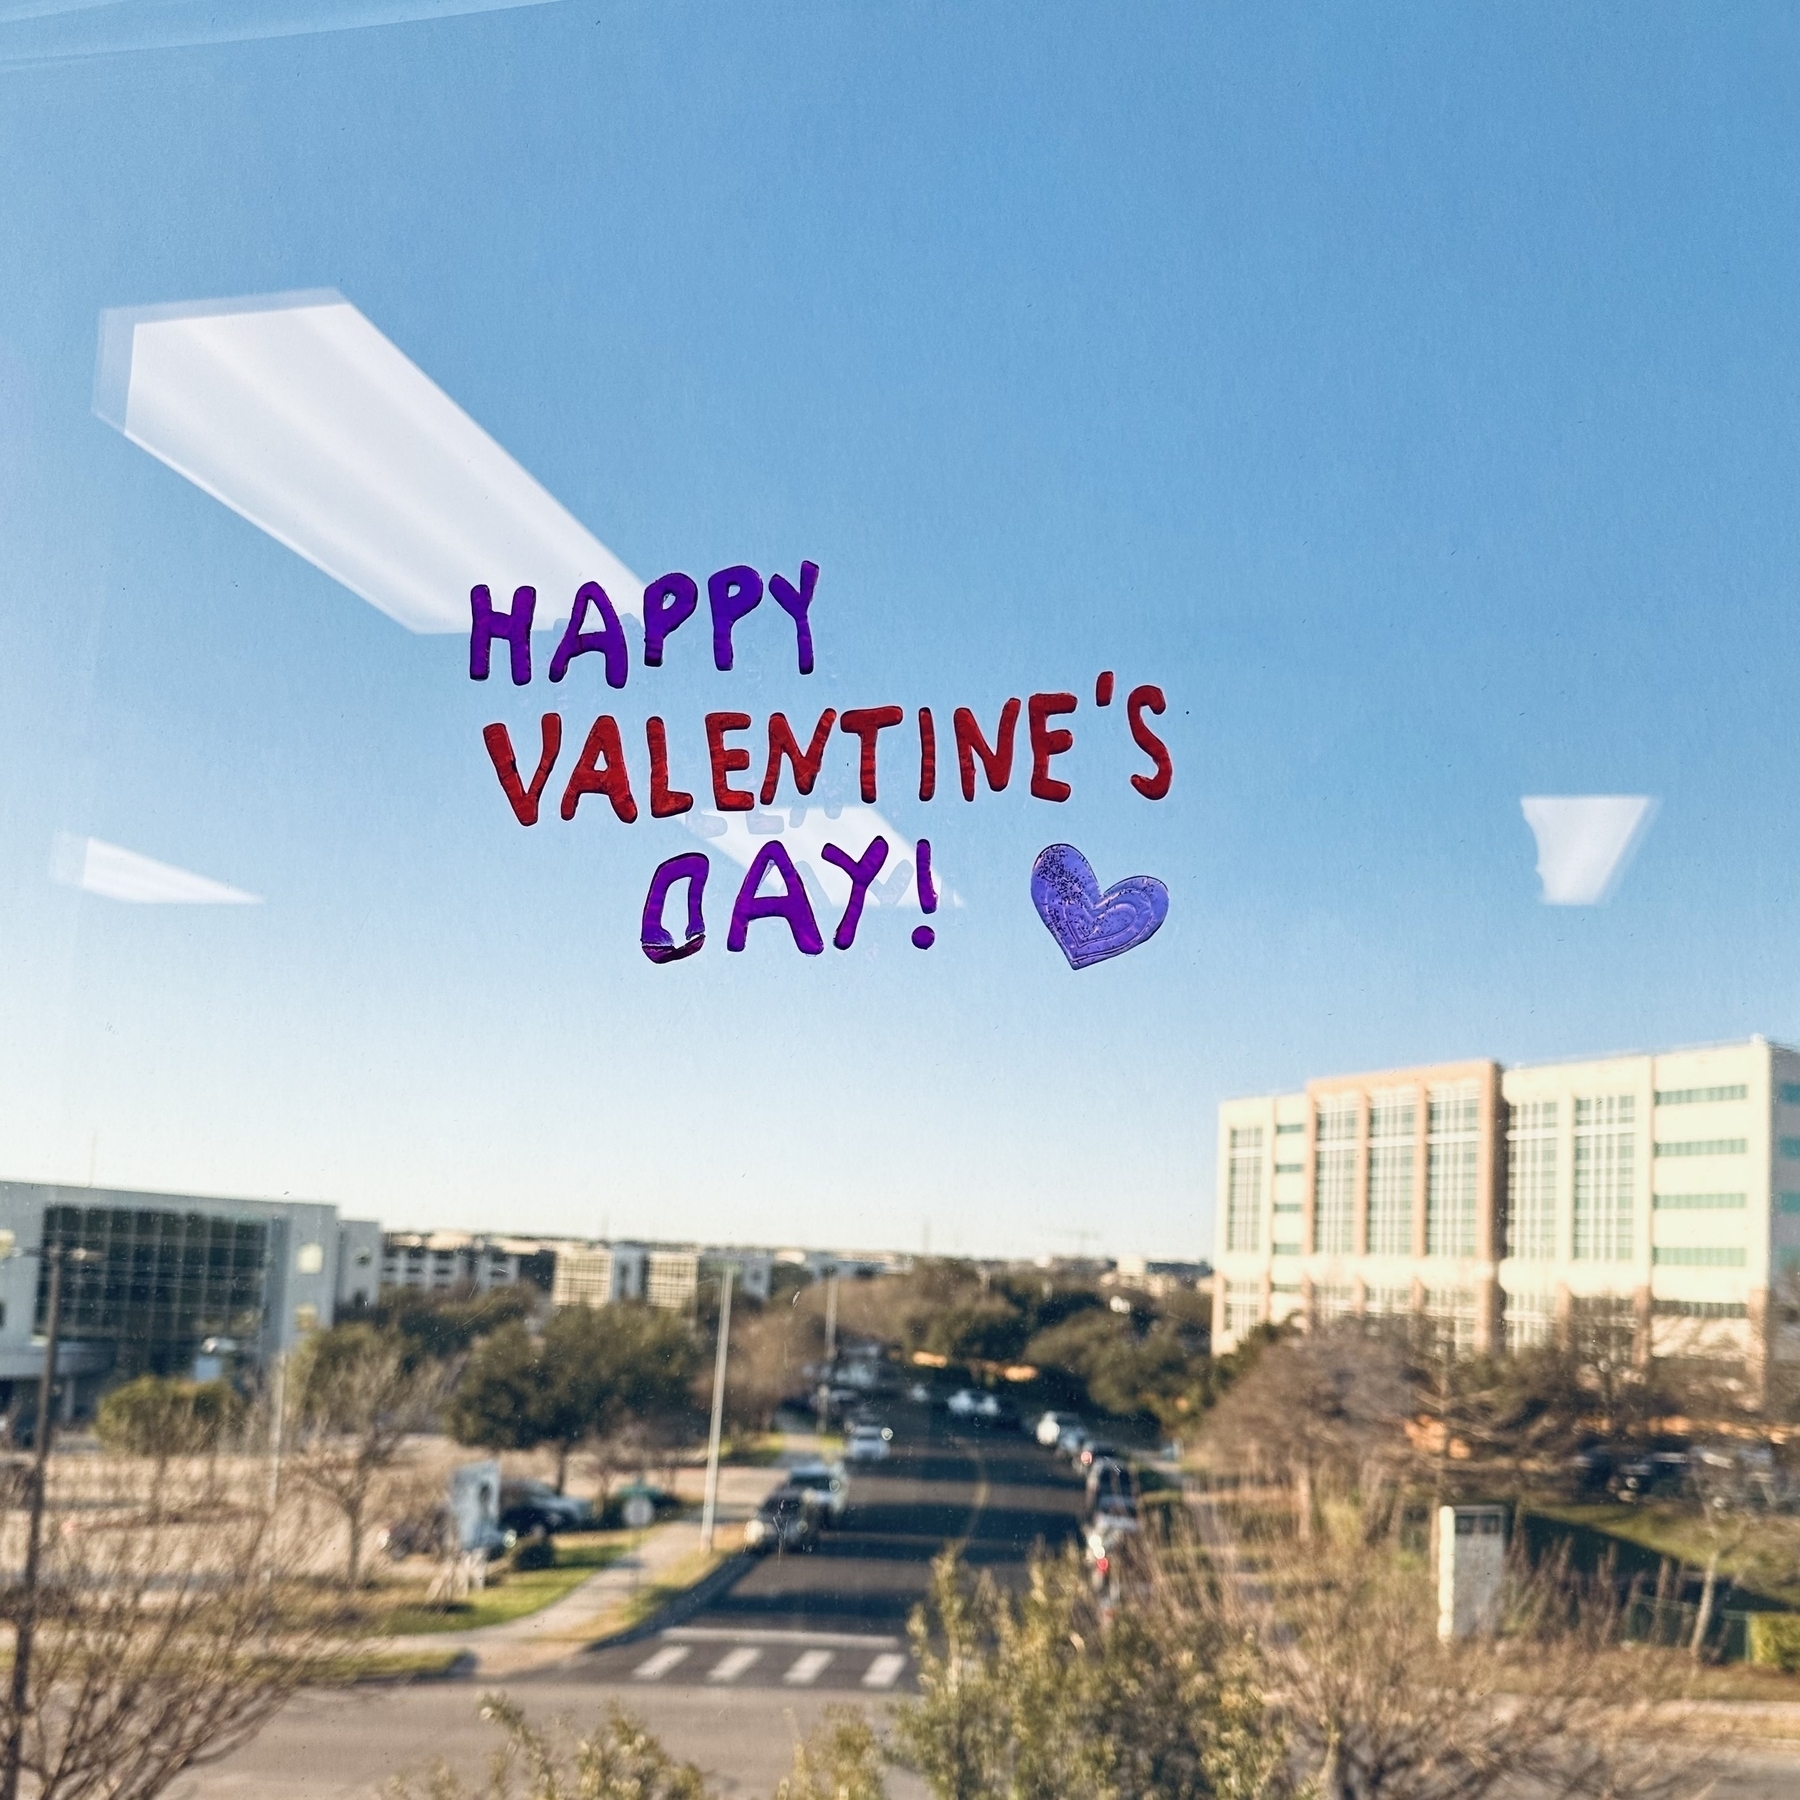 Happy Valentine’s Day with heart drawn on window.